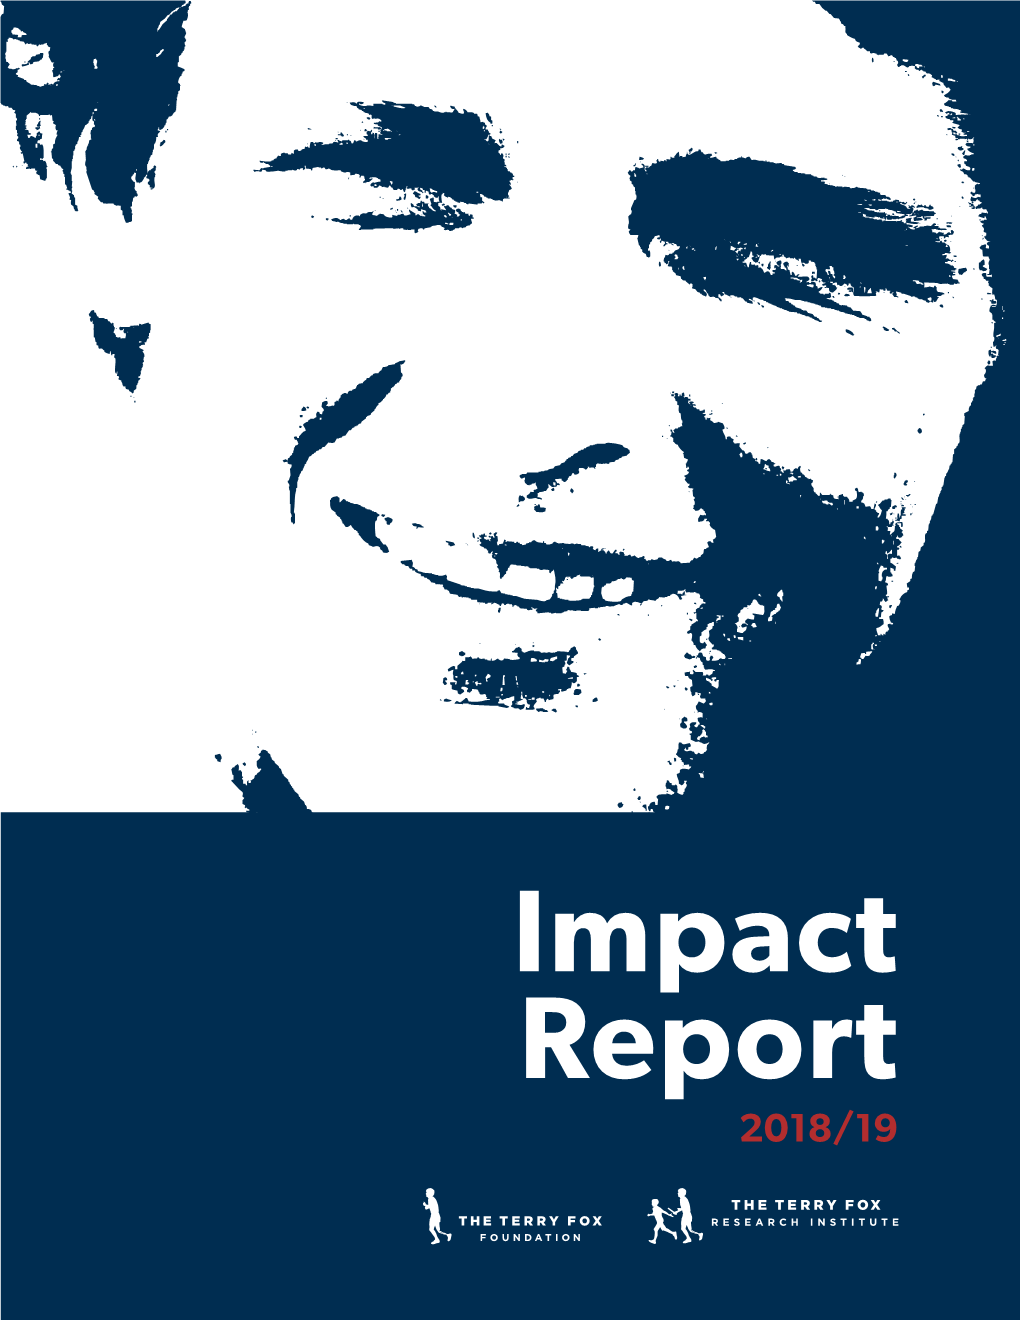 Impact Report 2018/19